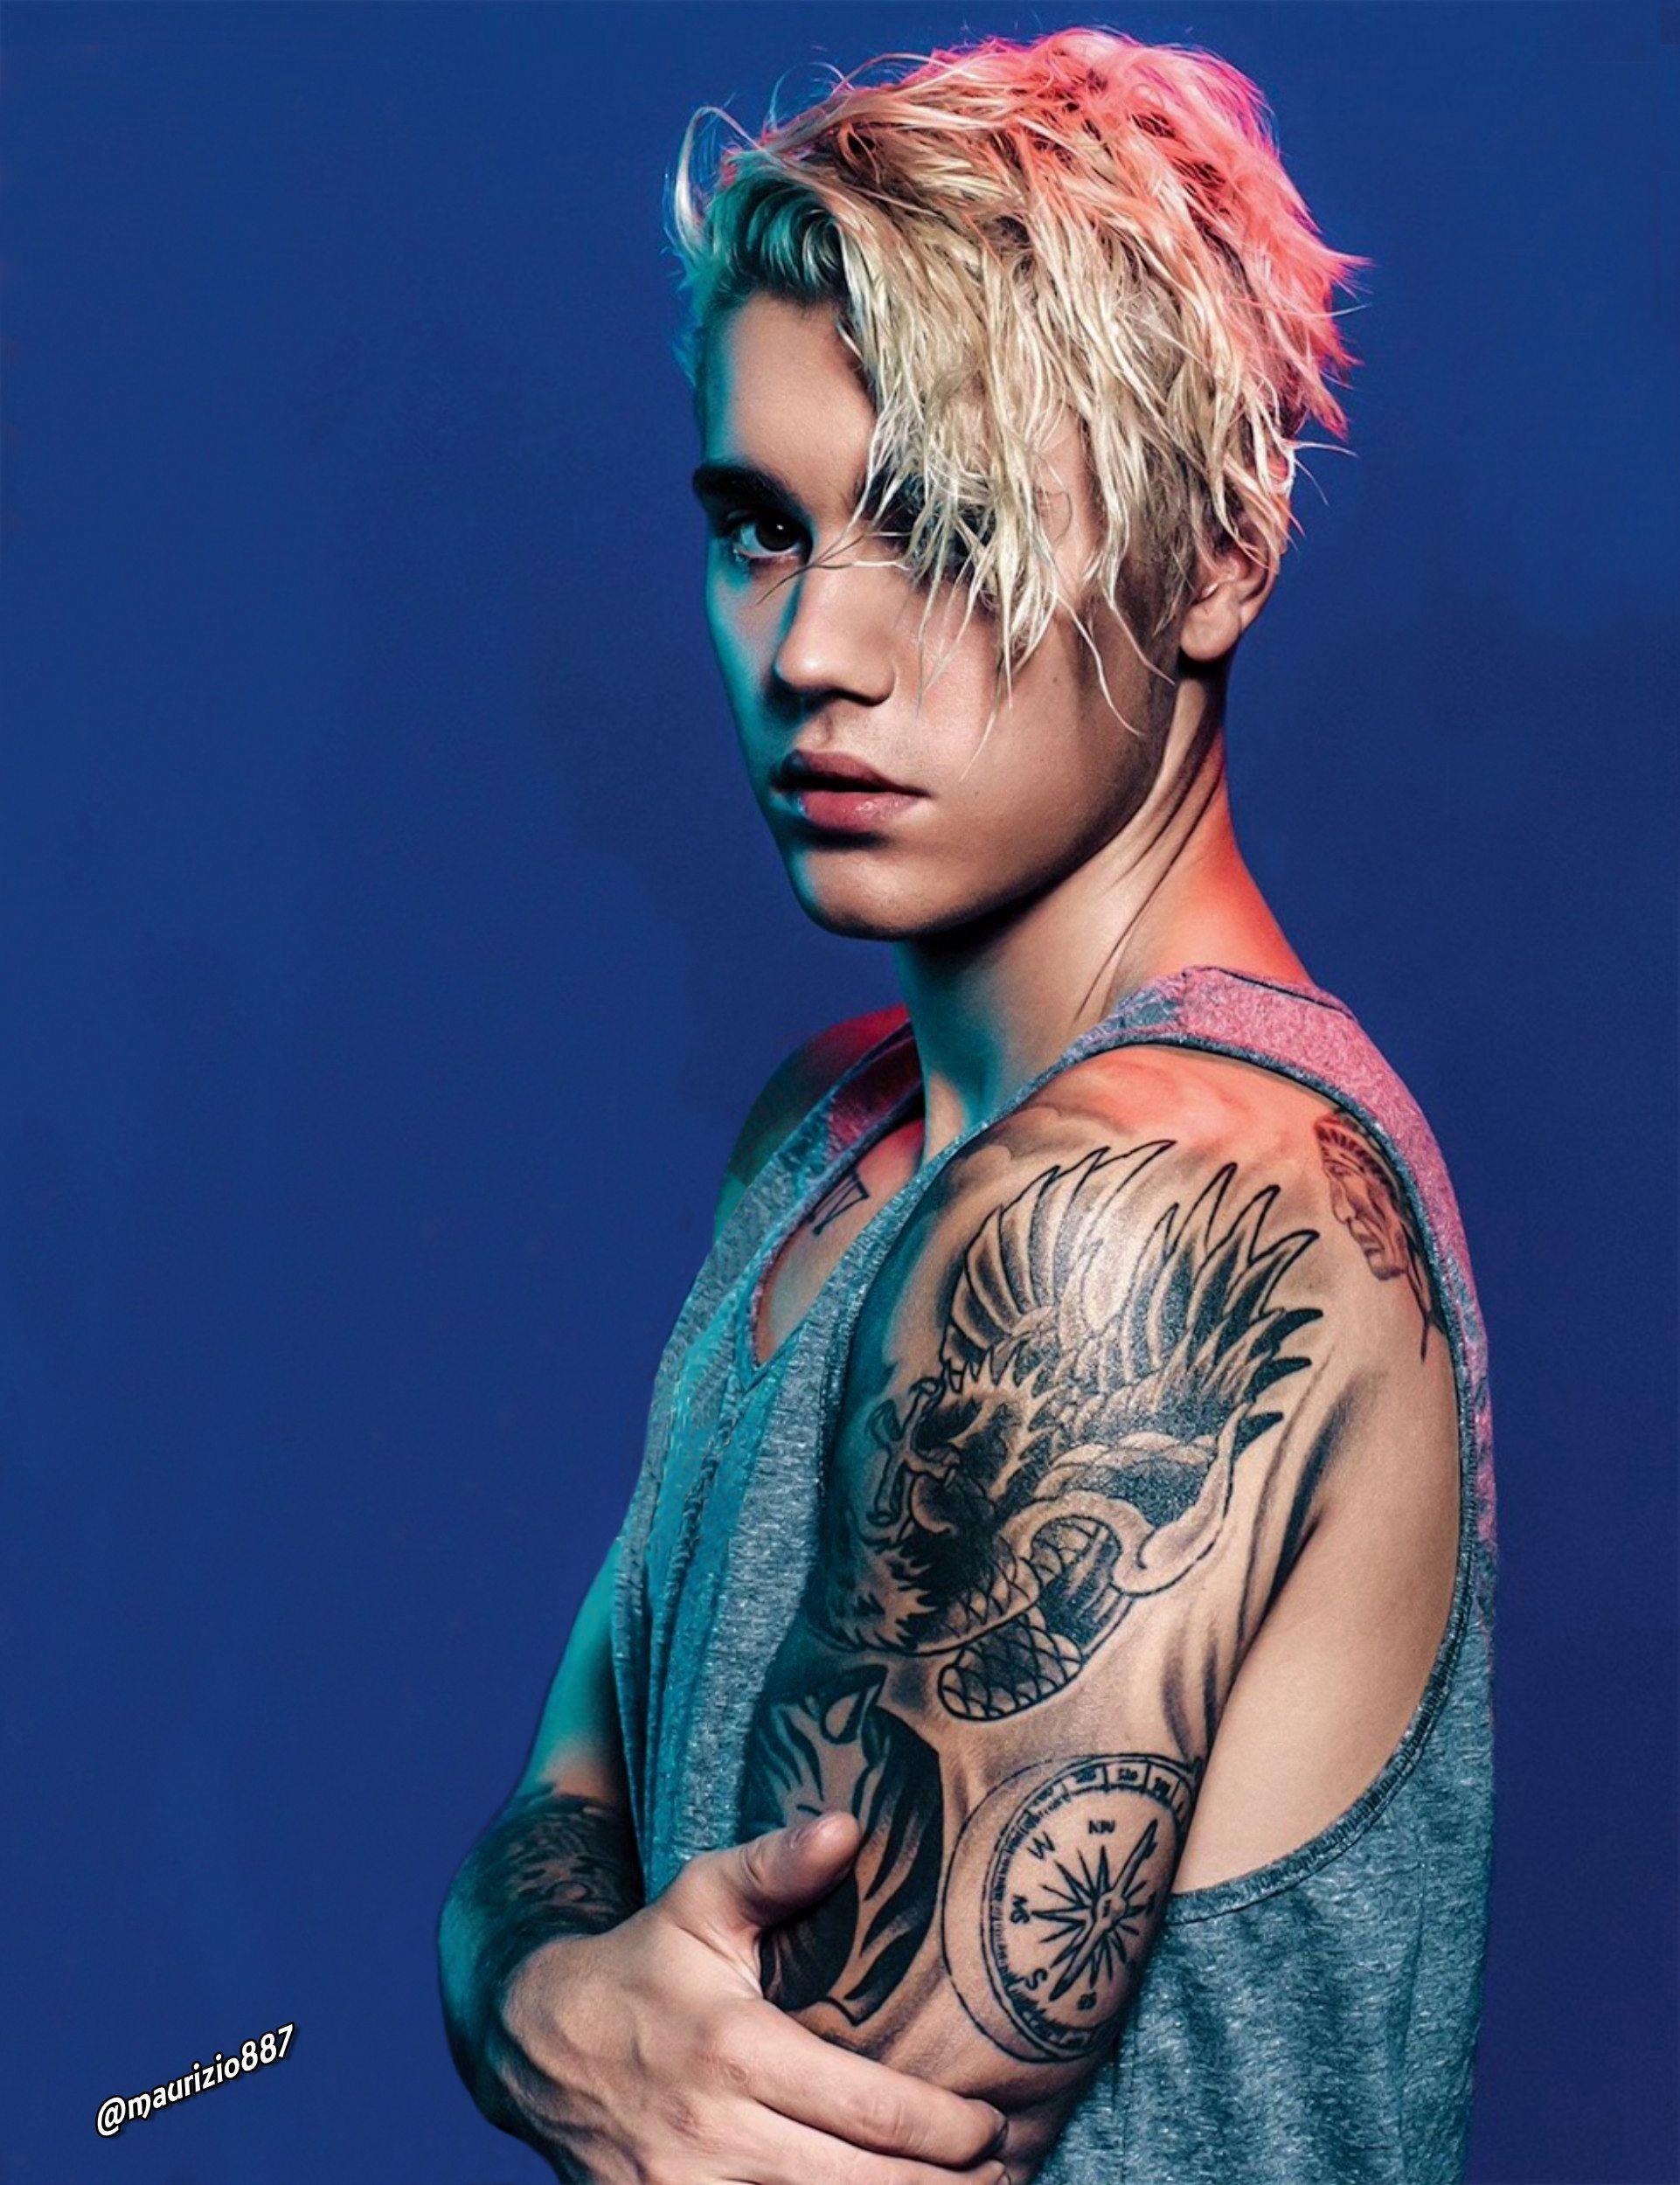 Justin Bieber image justin bieber, 2015 HD wallpaper and background